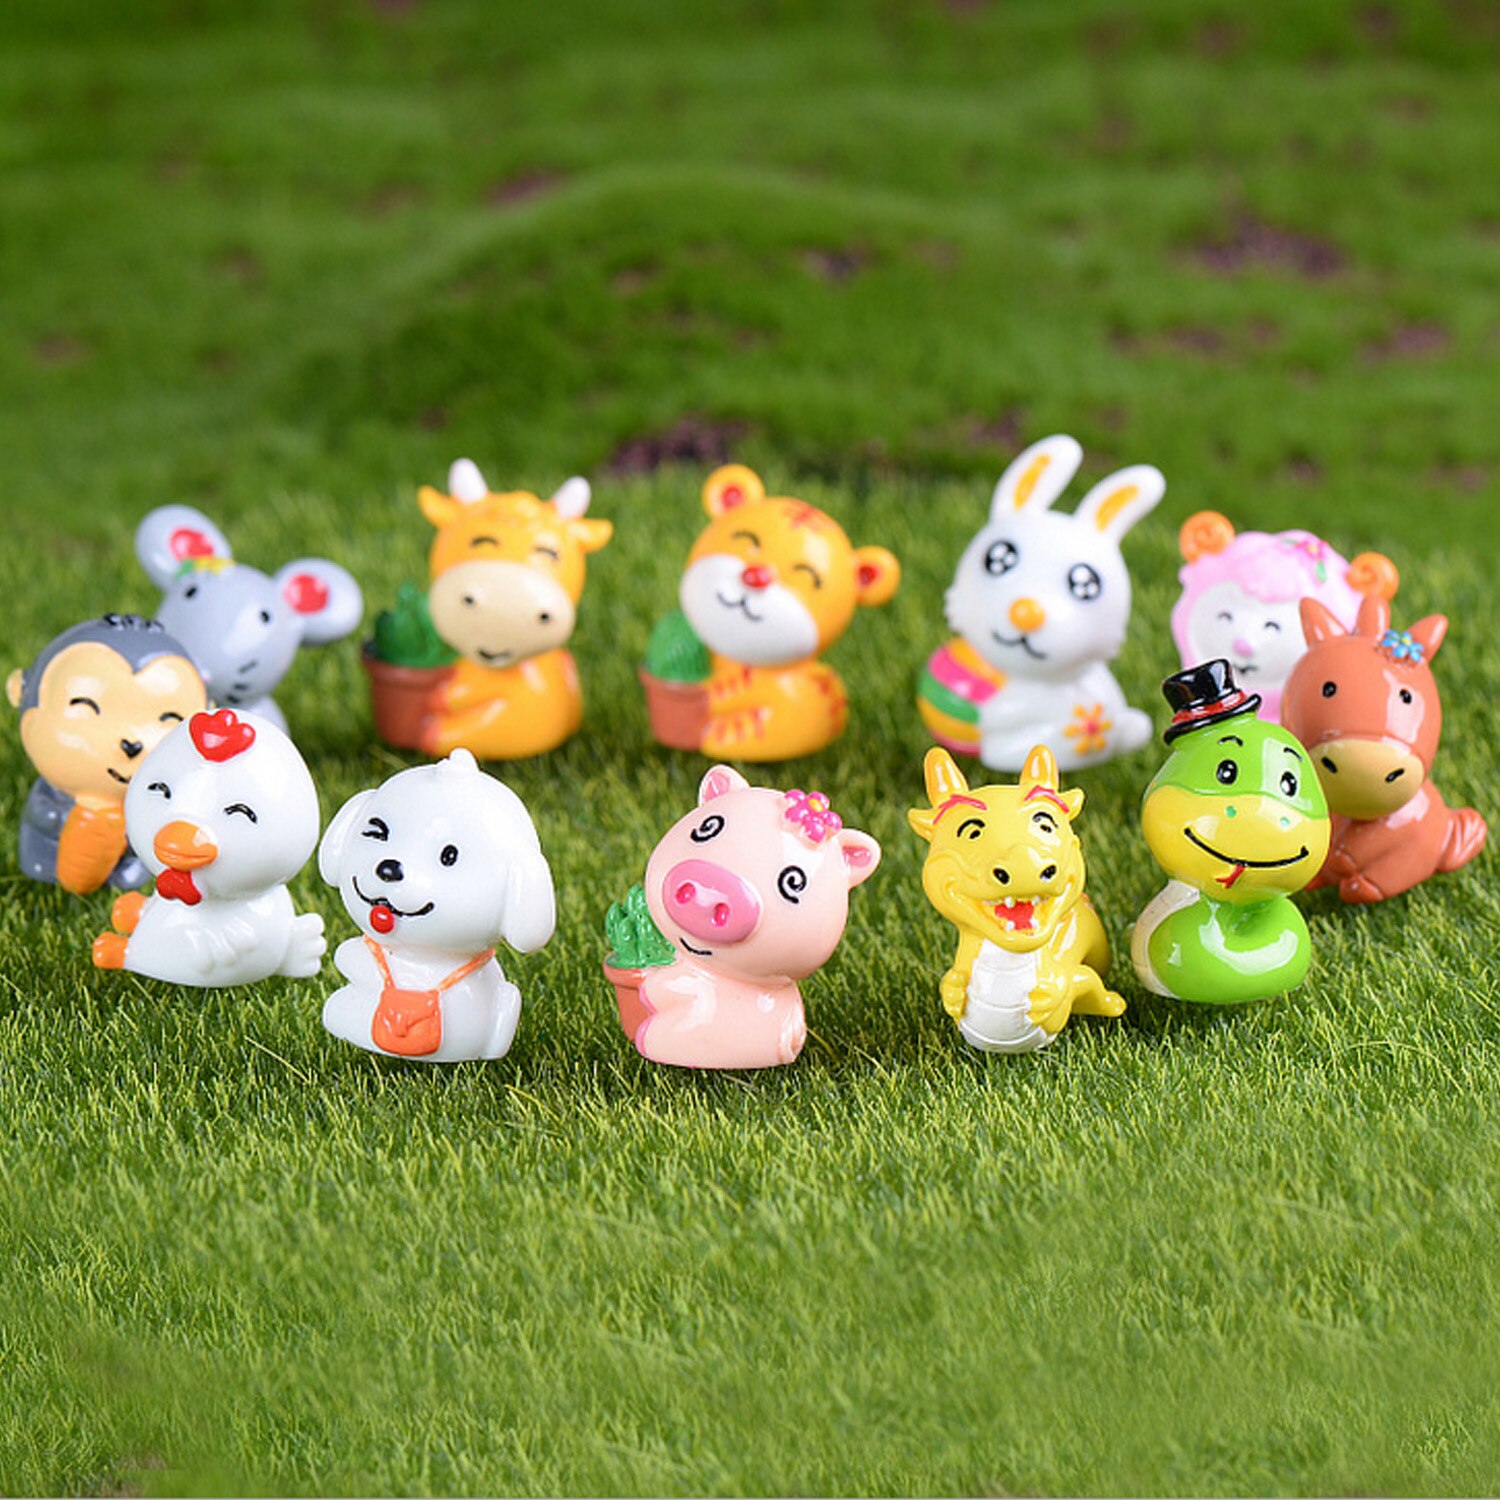 12PCS Cute Mini Resin Chinese Zodiac Animal Figures Dolls Micro Landscape Decor Home Desktop Decorations Dollhouse Ornaments